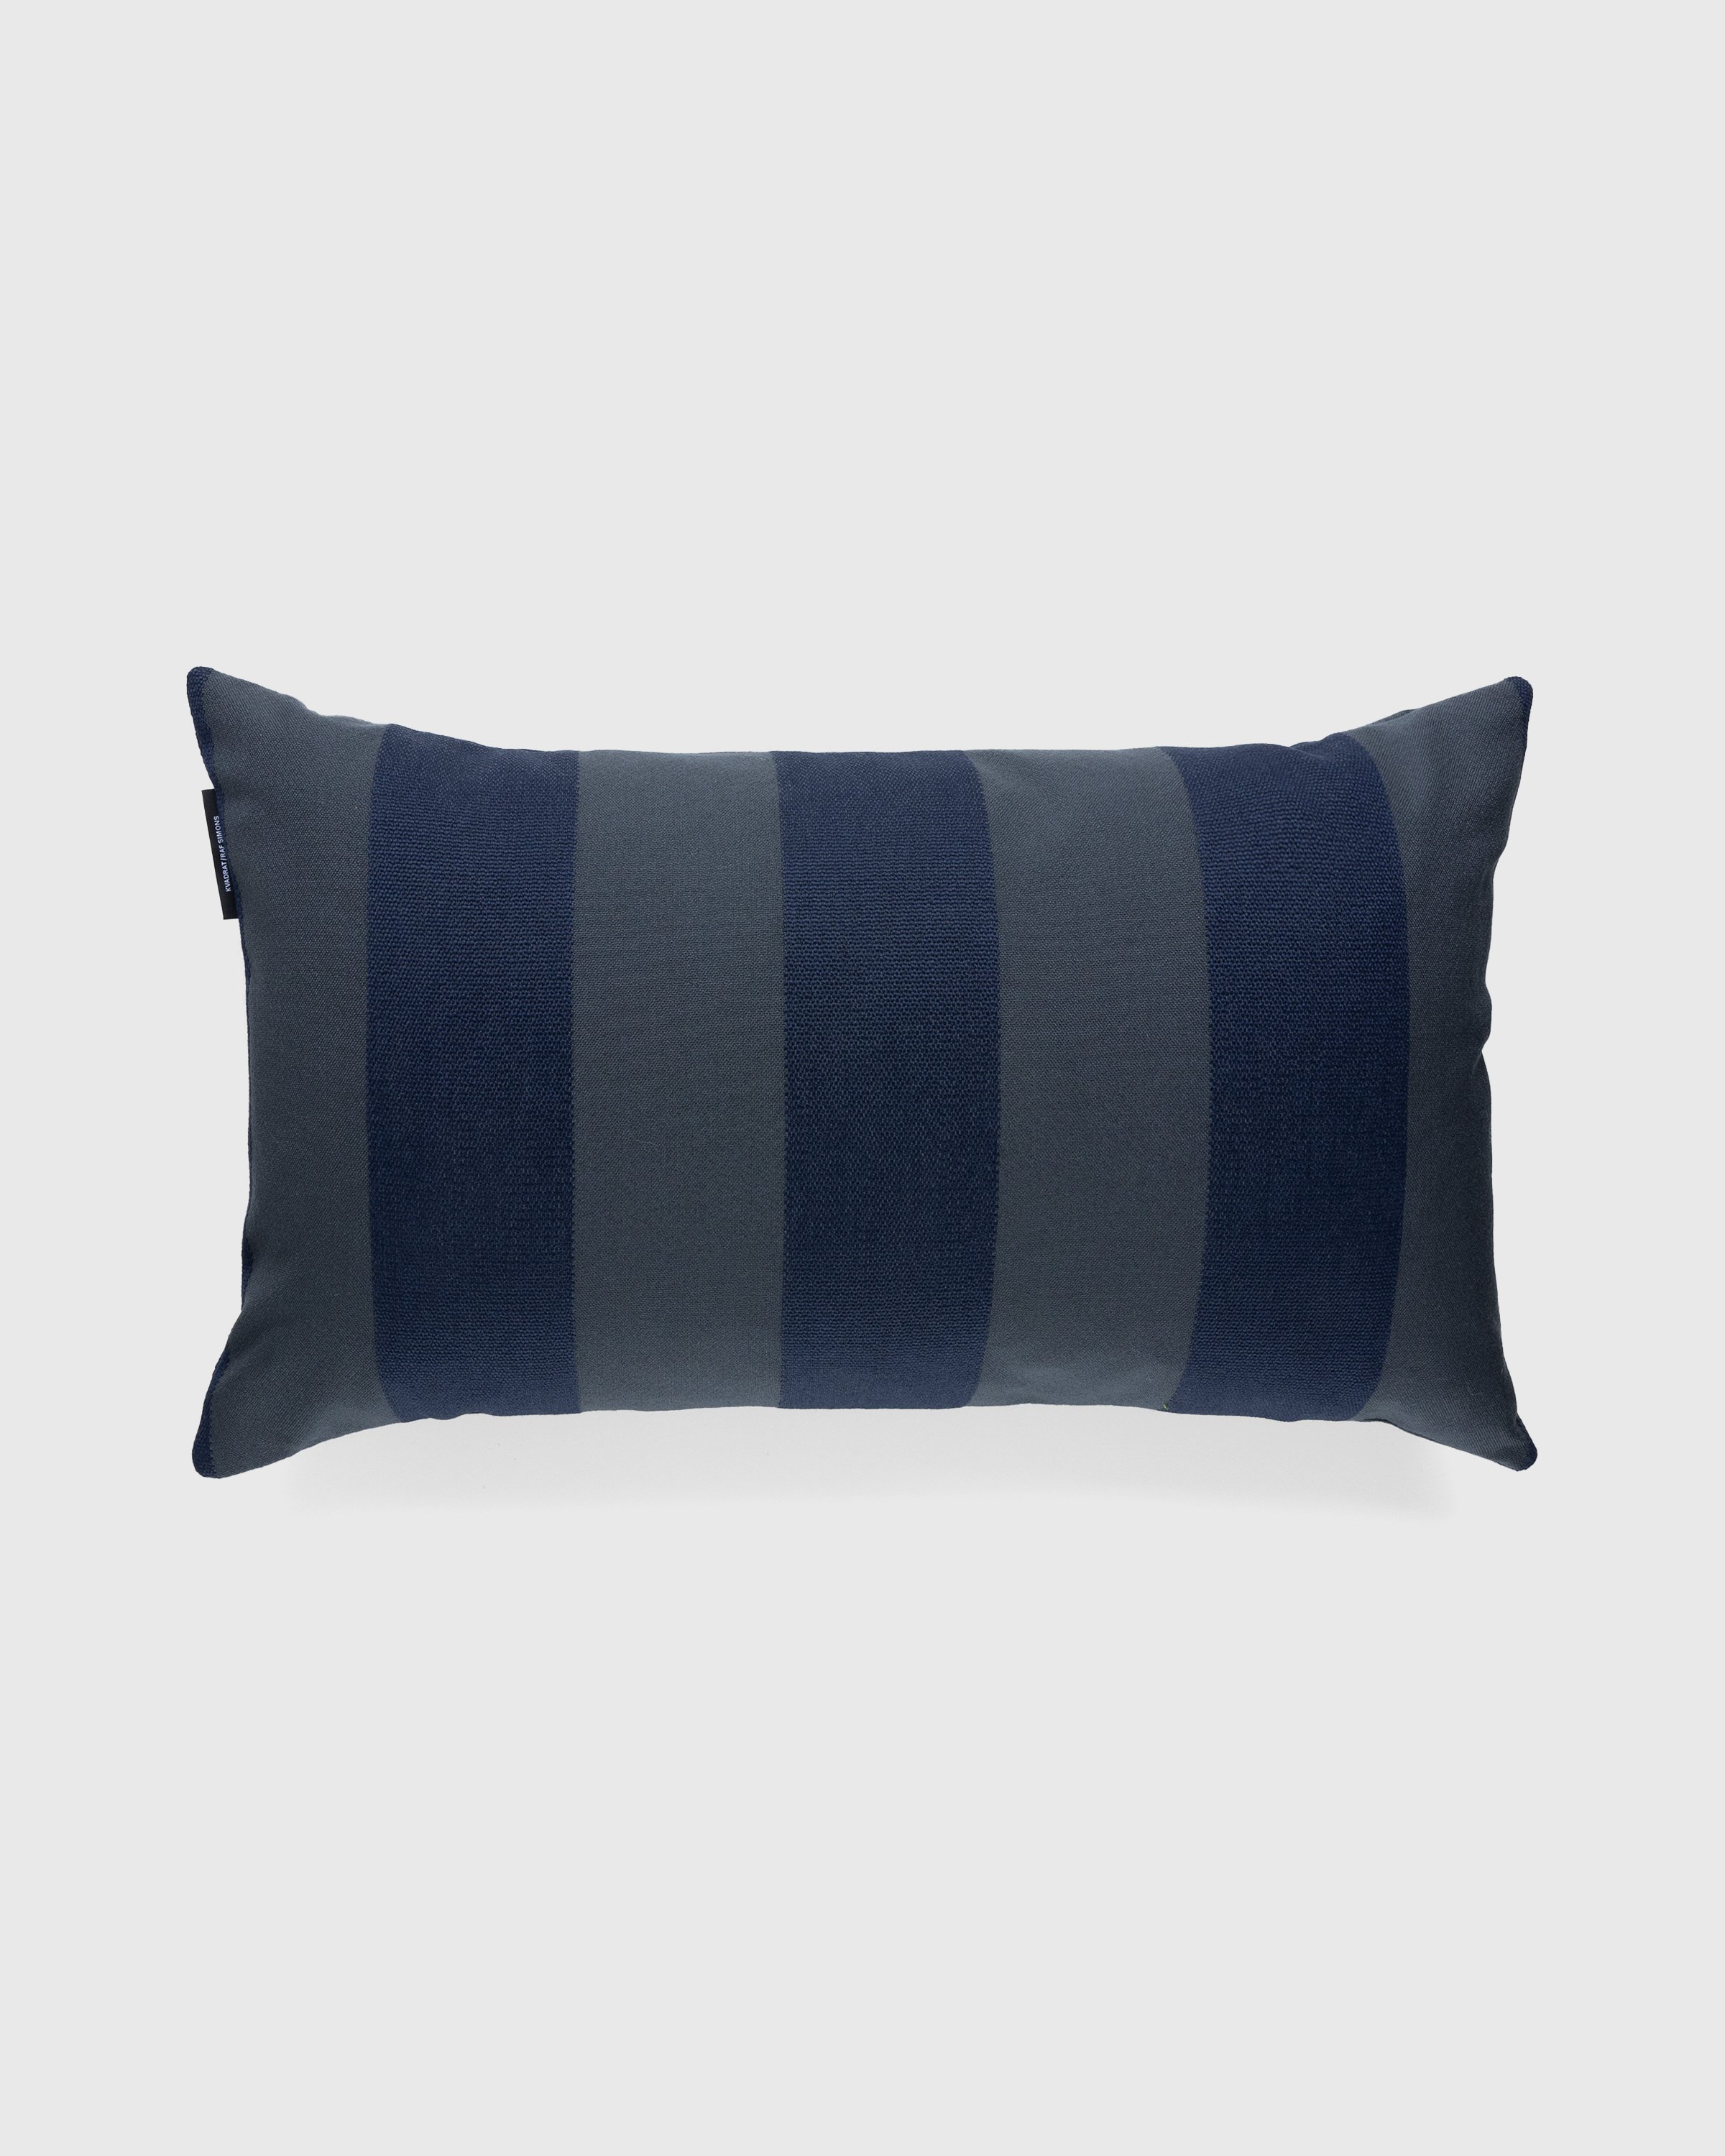 Kvadrat/Raf Simons - Reflex Pillow Grey/Blue - Lifestyle - Blue - Image 1